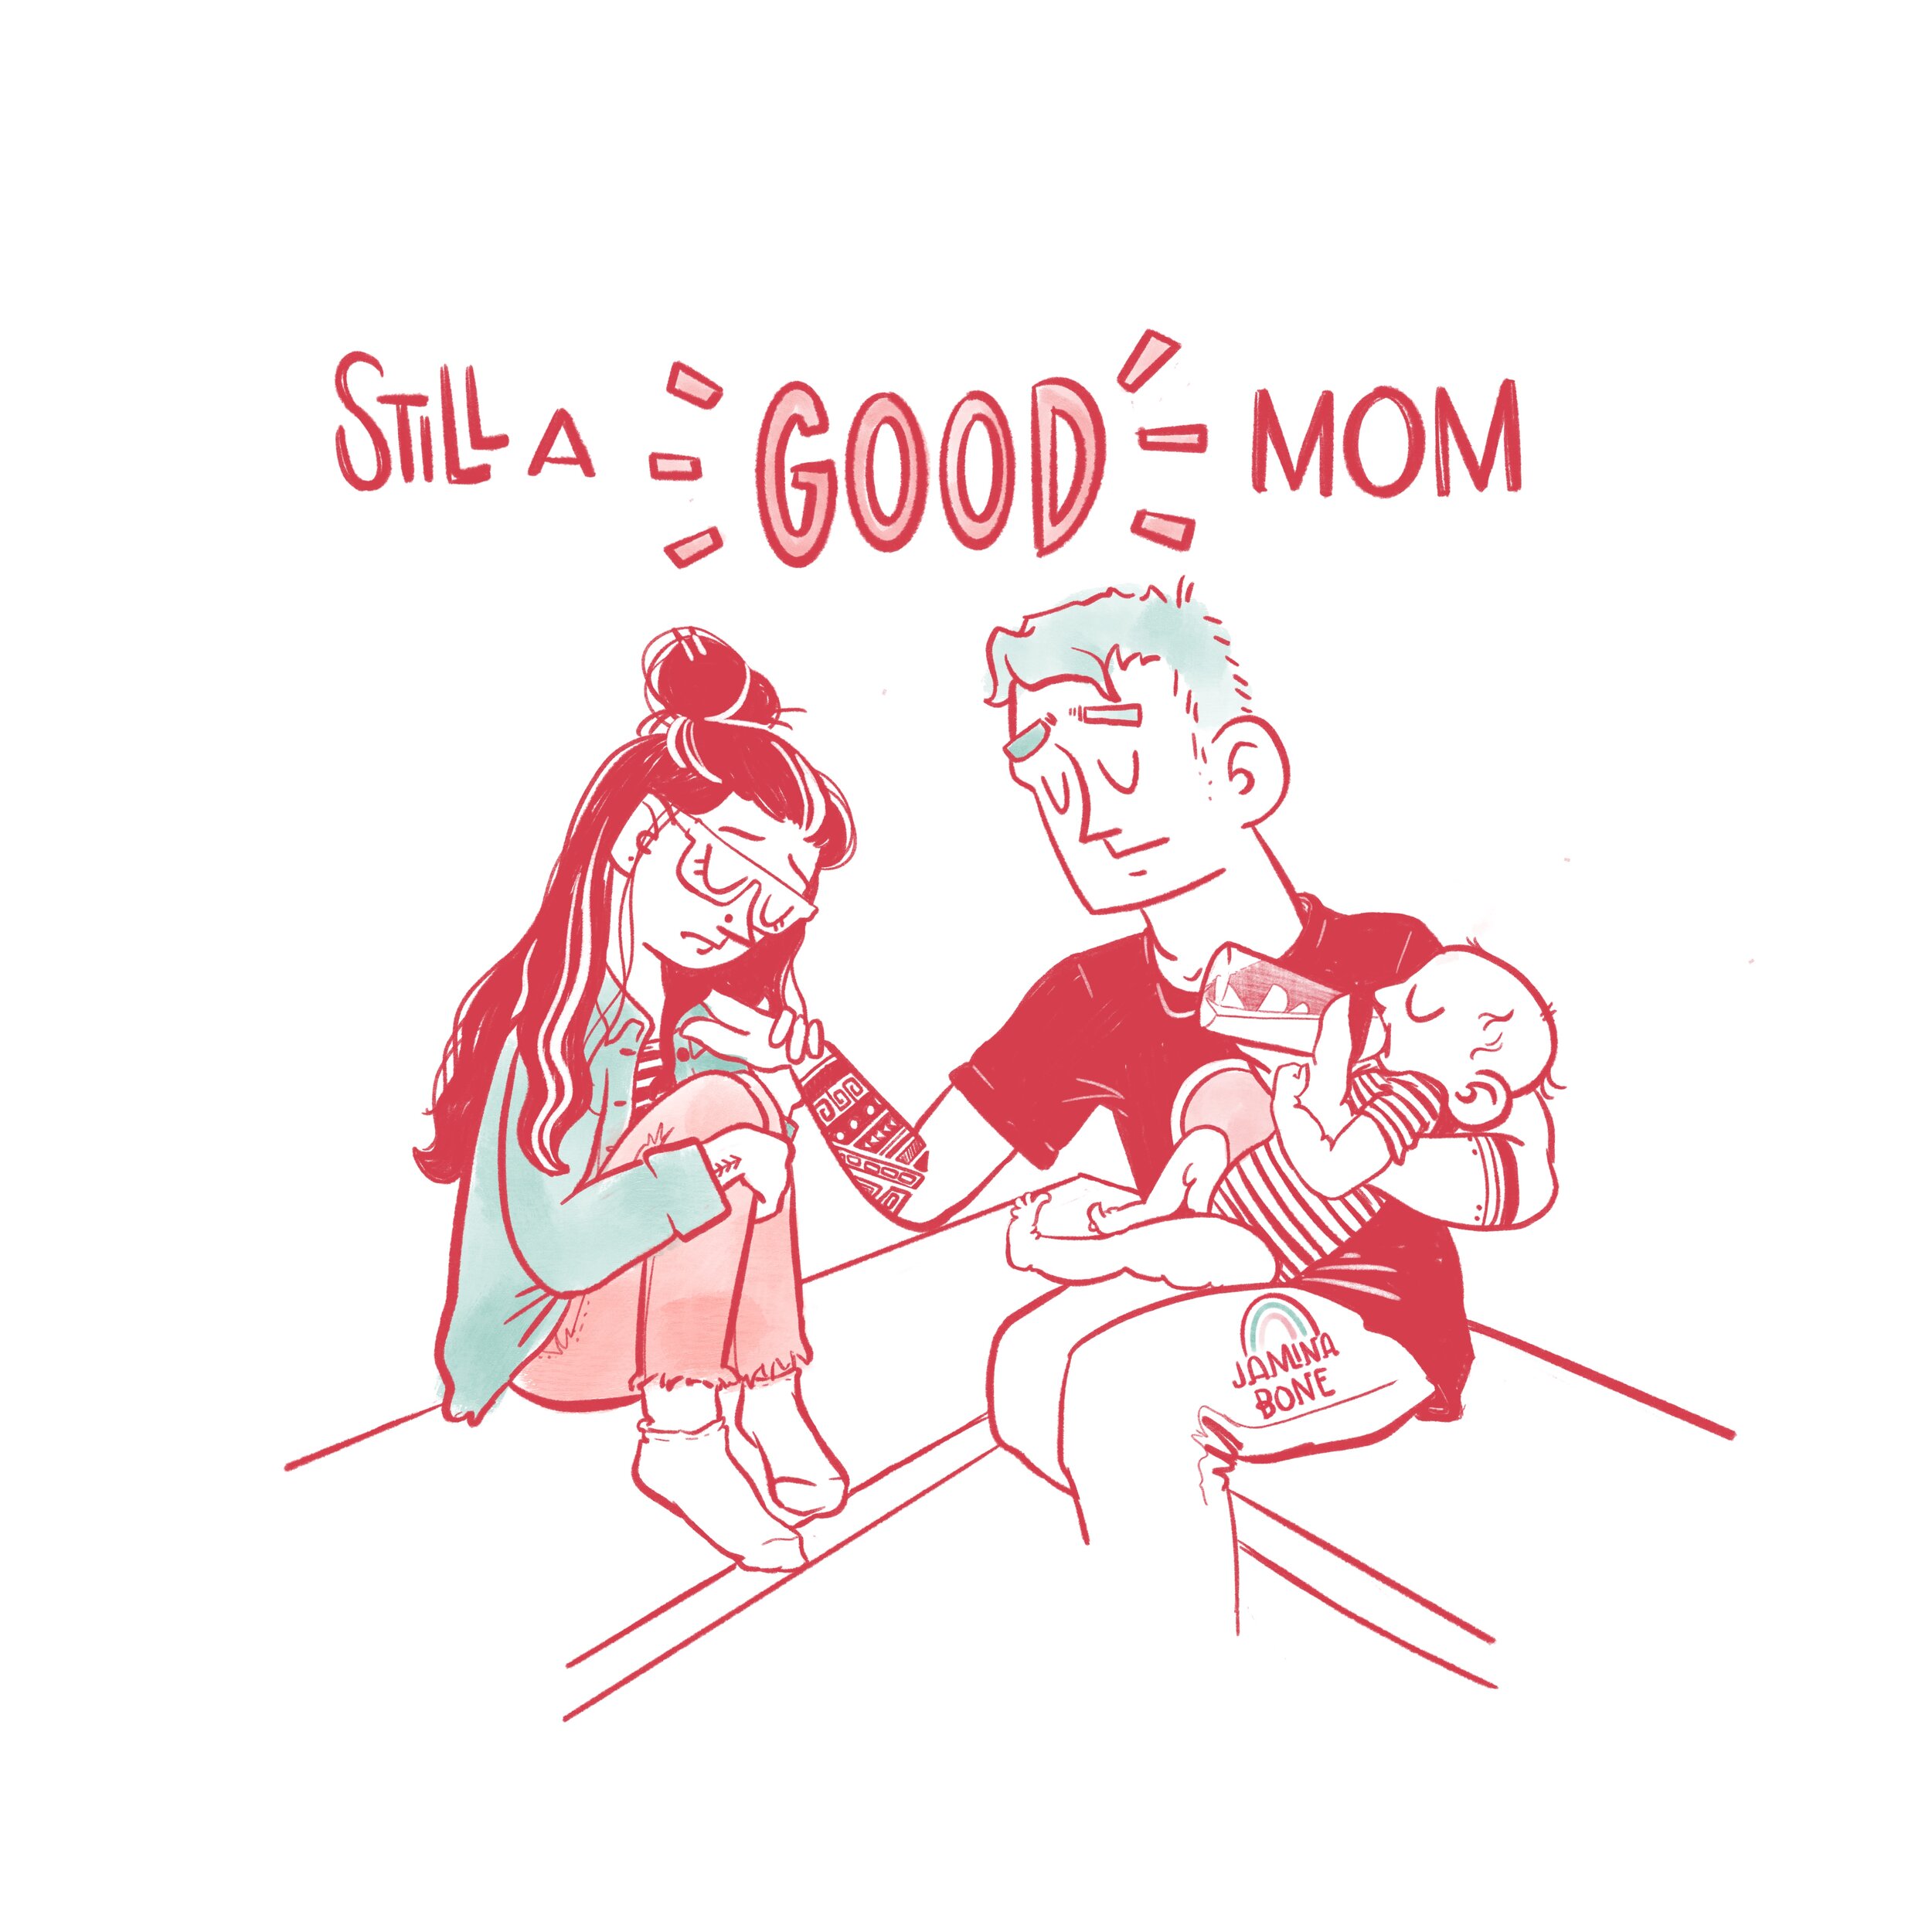 Комиксы мать 18. Good mom. Комиксы про материнство. Комиксы про материнство и работу. Good mom backet.